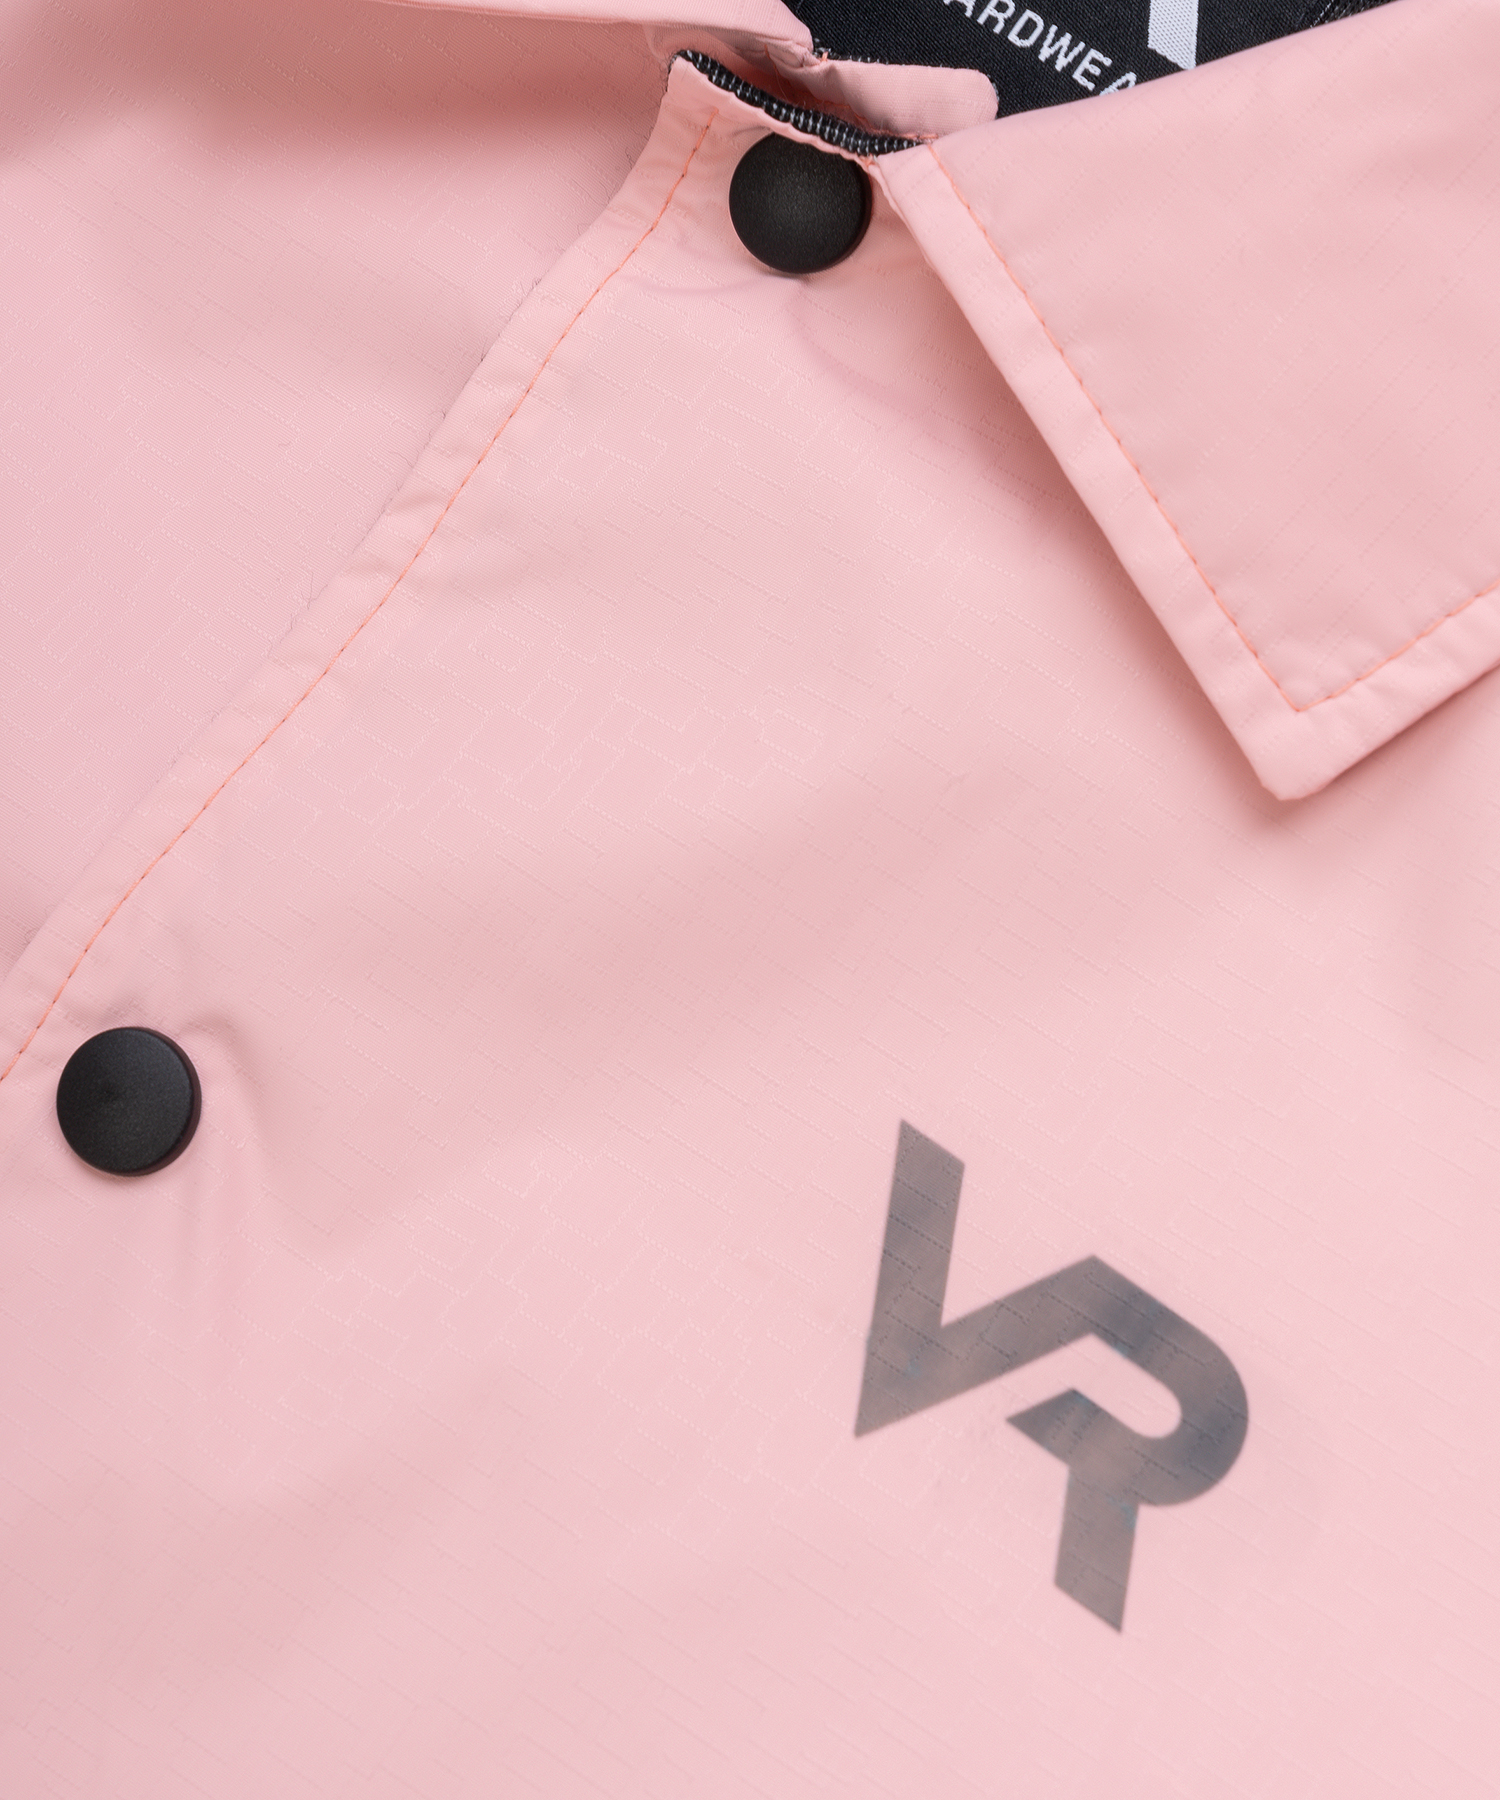 Куртка Coach VR Розовый